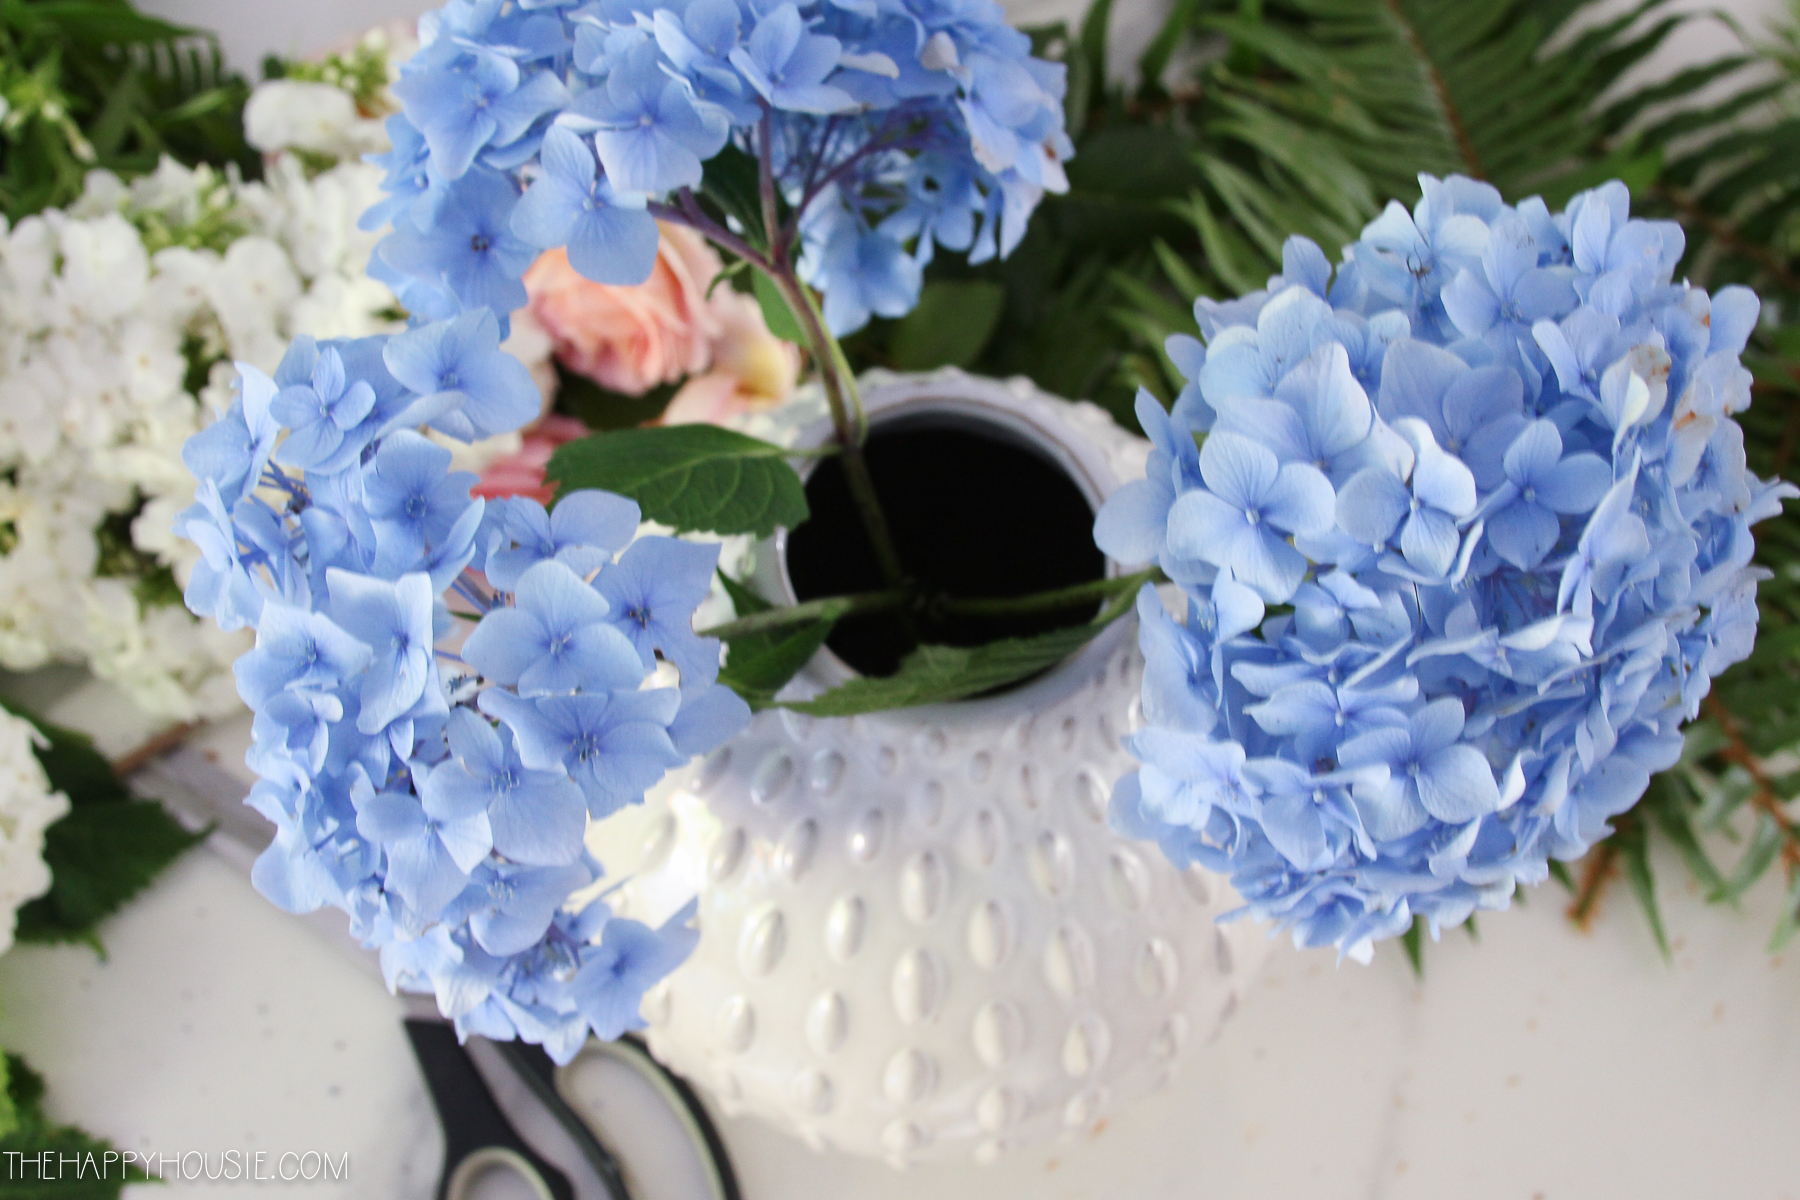 Putting the pretty blue hydrangeas in a white vase.